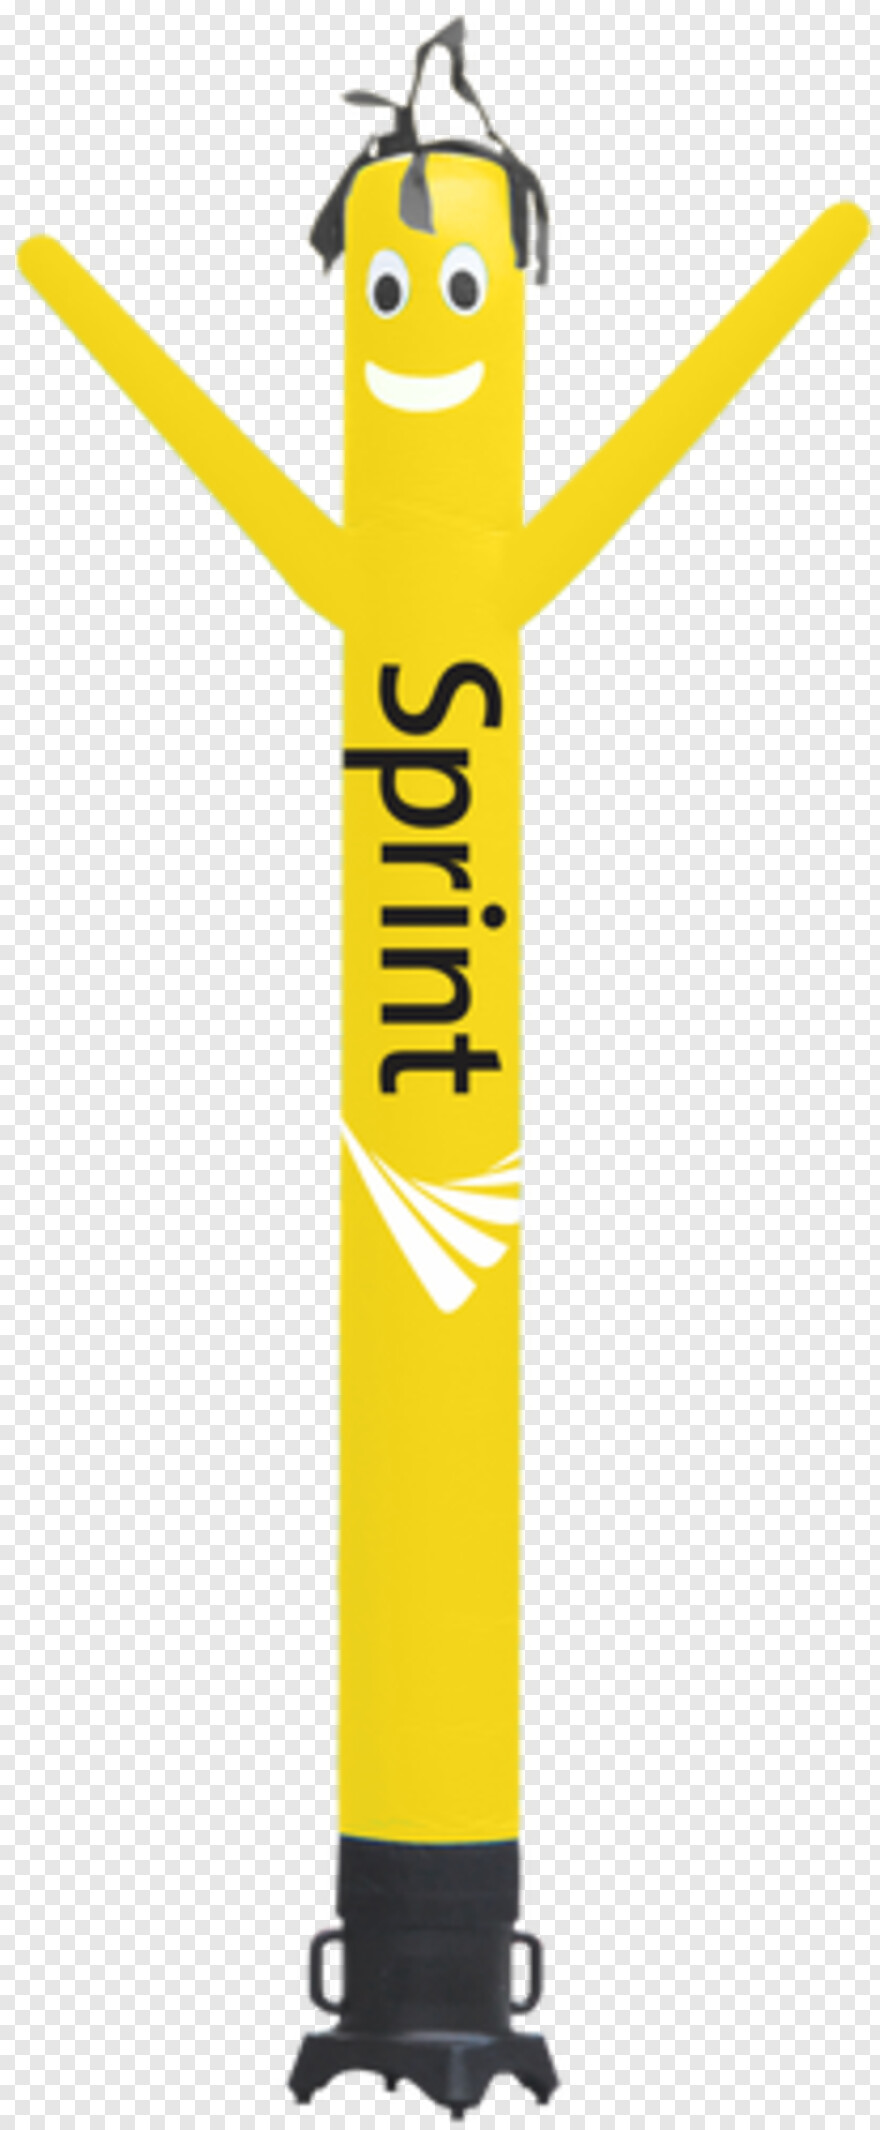 sprint-logo # 613184